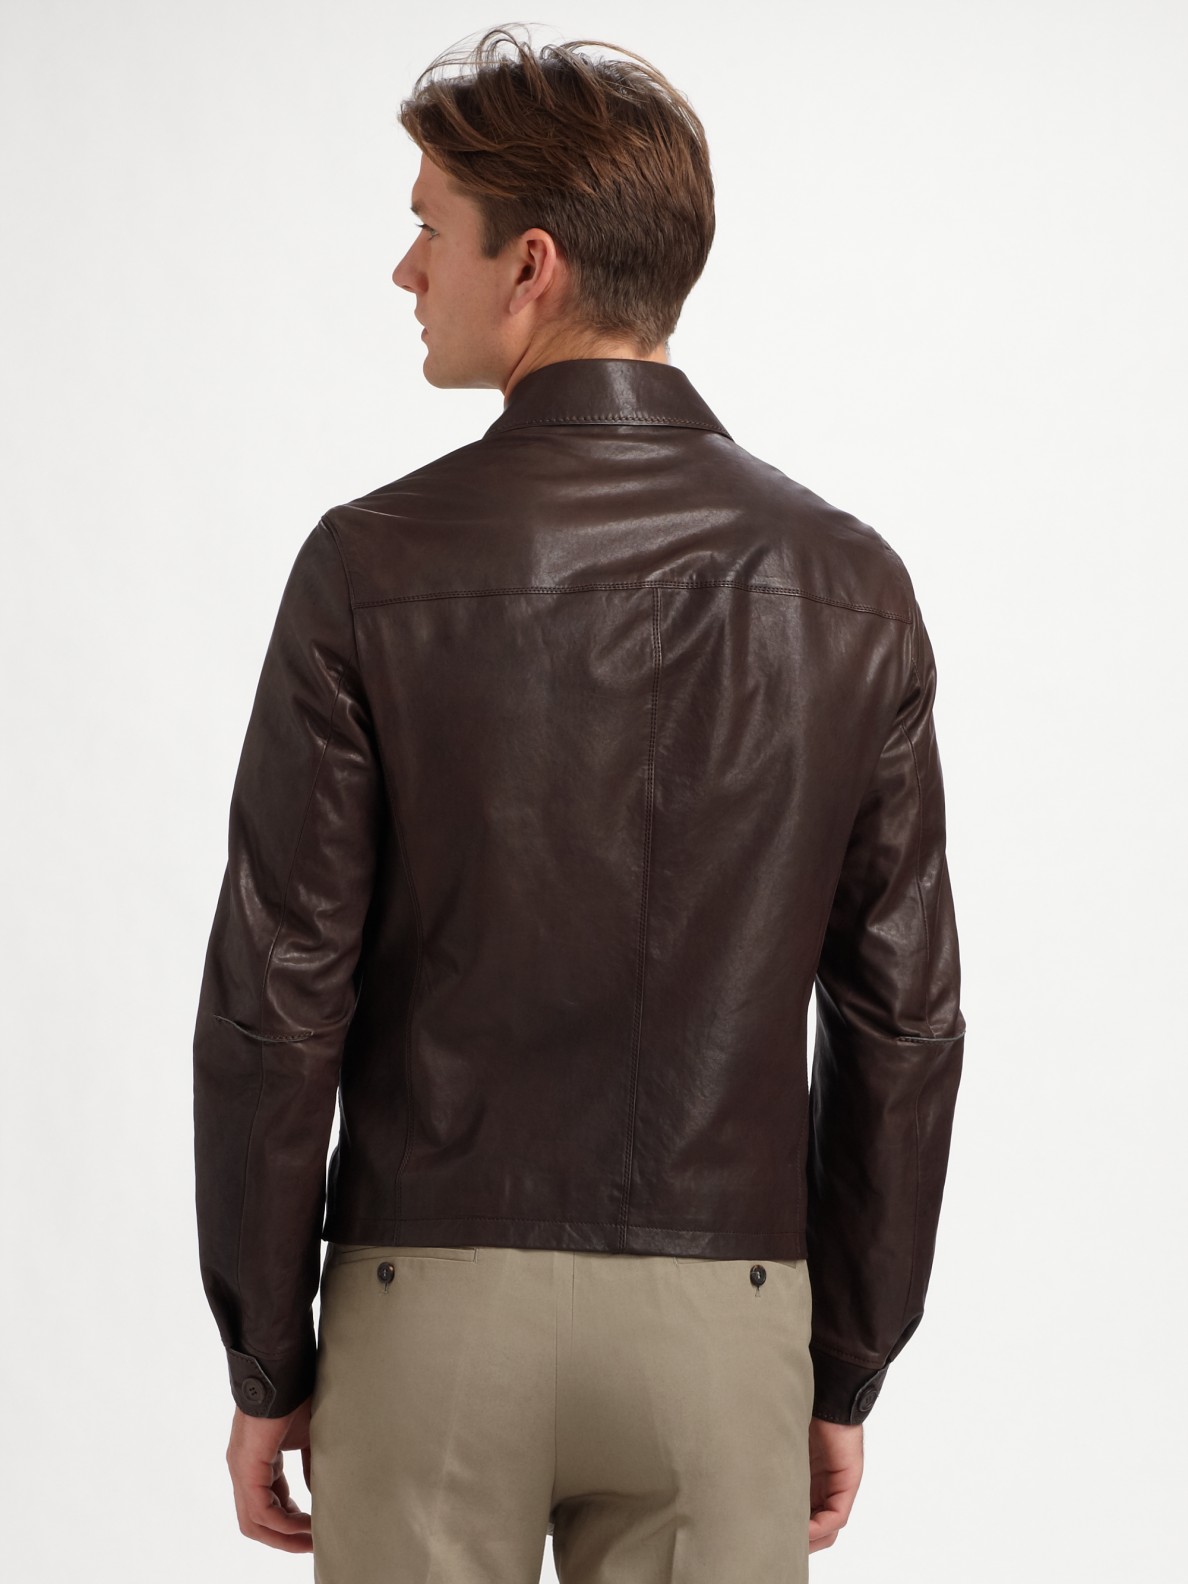 Lyst - Prada Leather Jacket in Brown for Men